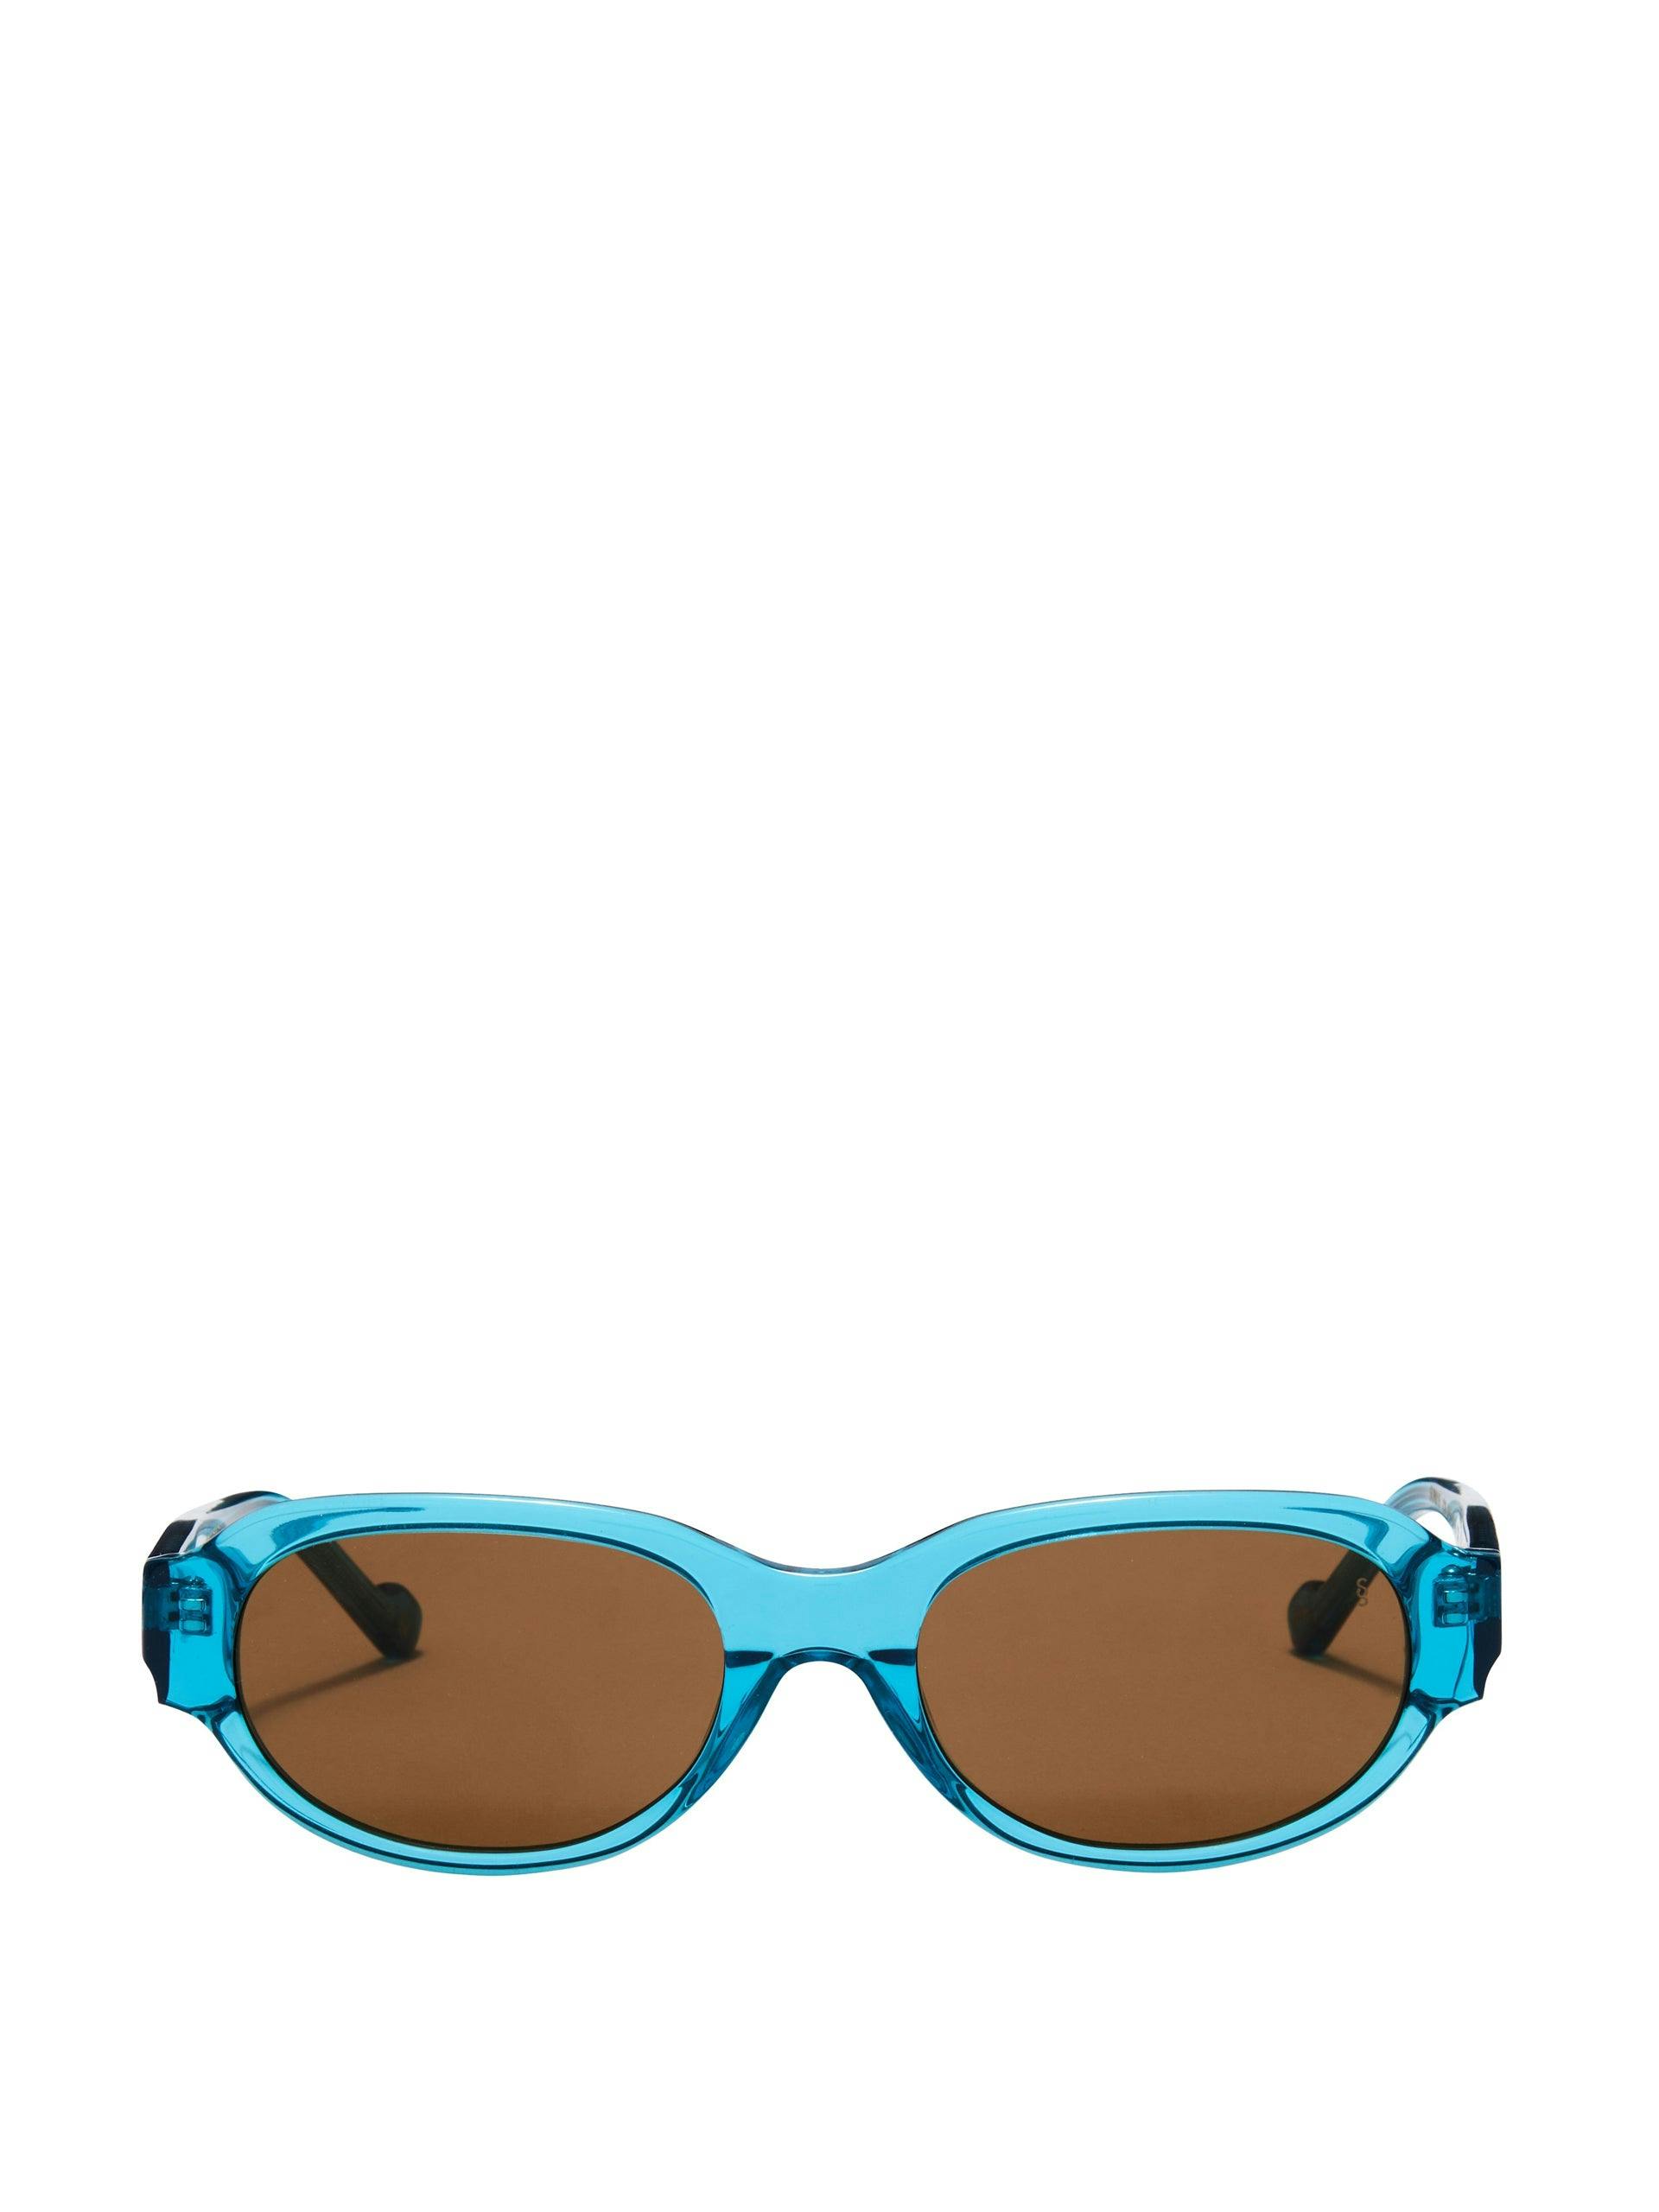 Brooke sunglasses in azure crystal